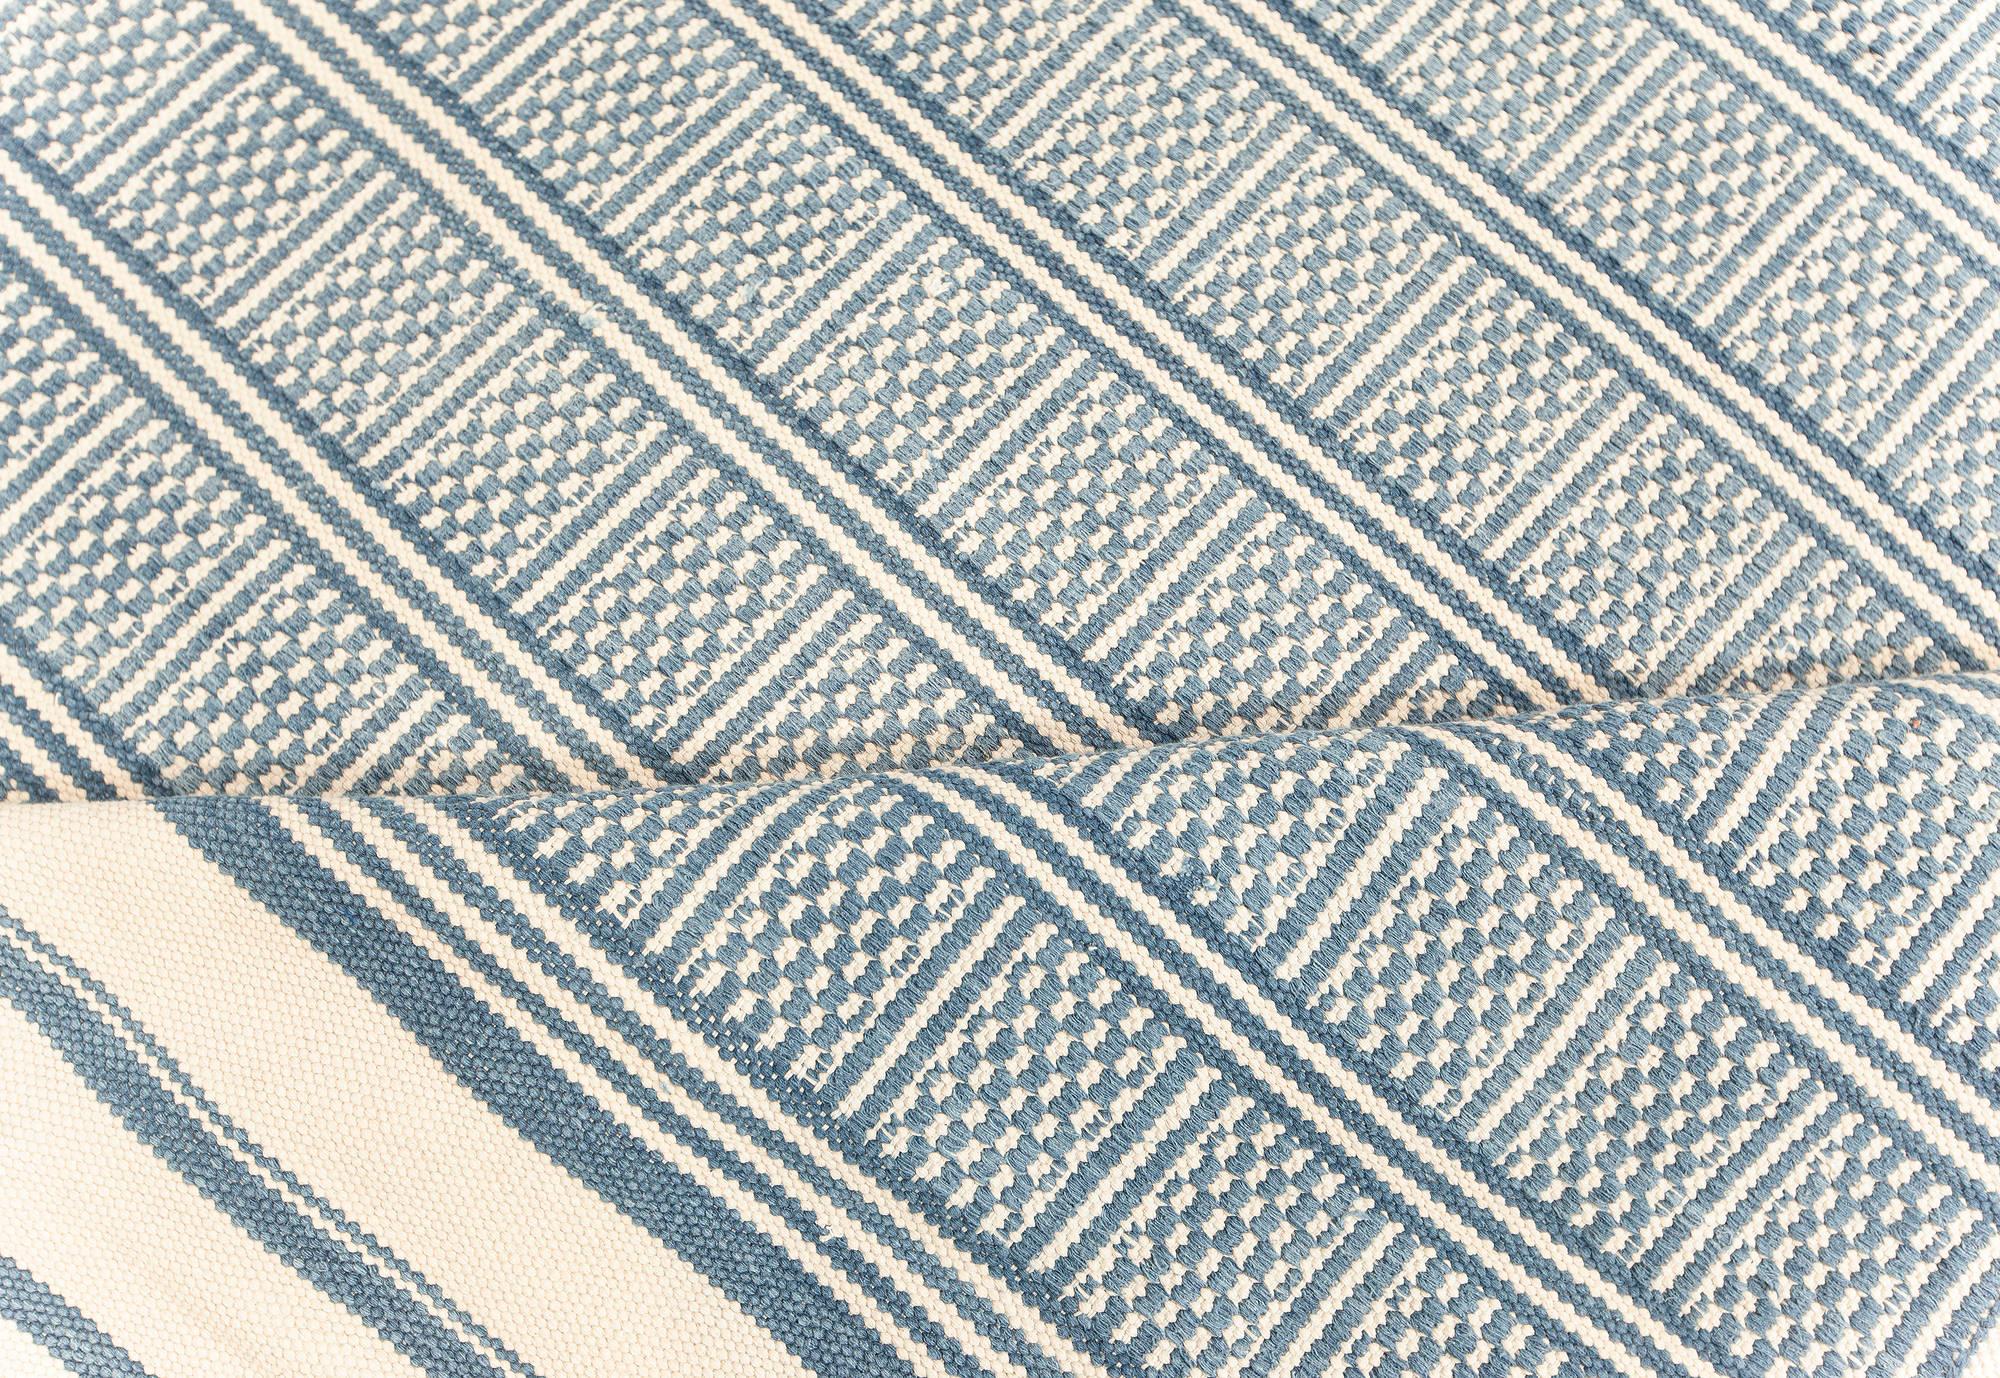 Doris Leslie Blau Collection modern geometric oversized dhurrie blue, white rug
Size: 16'0